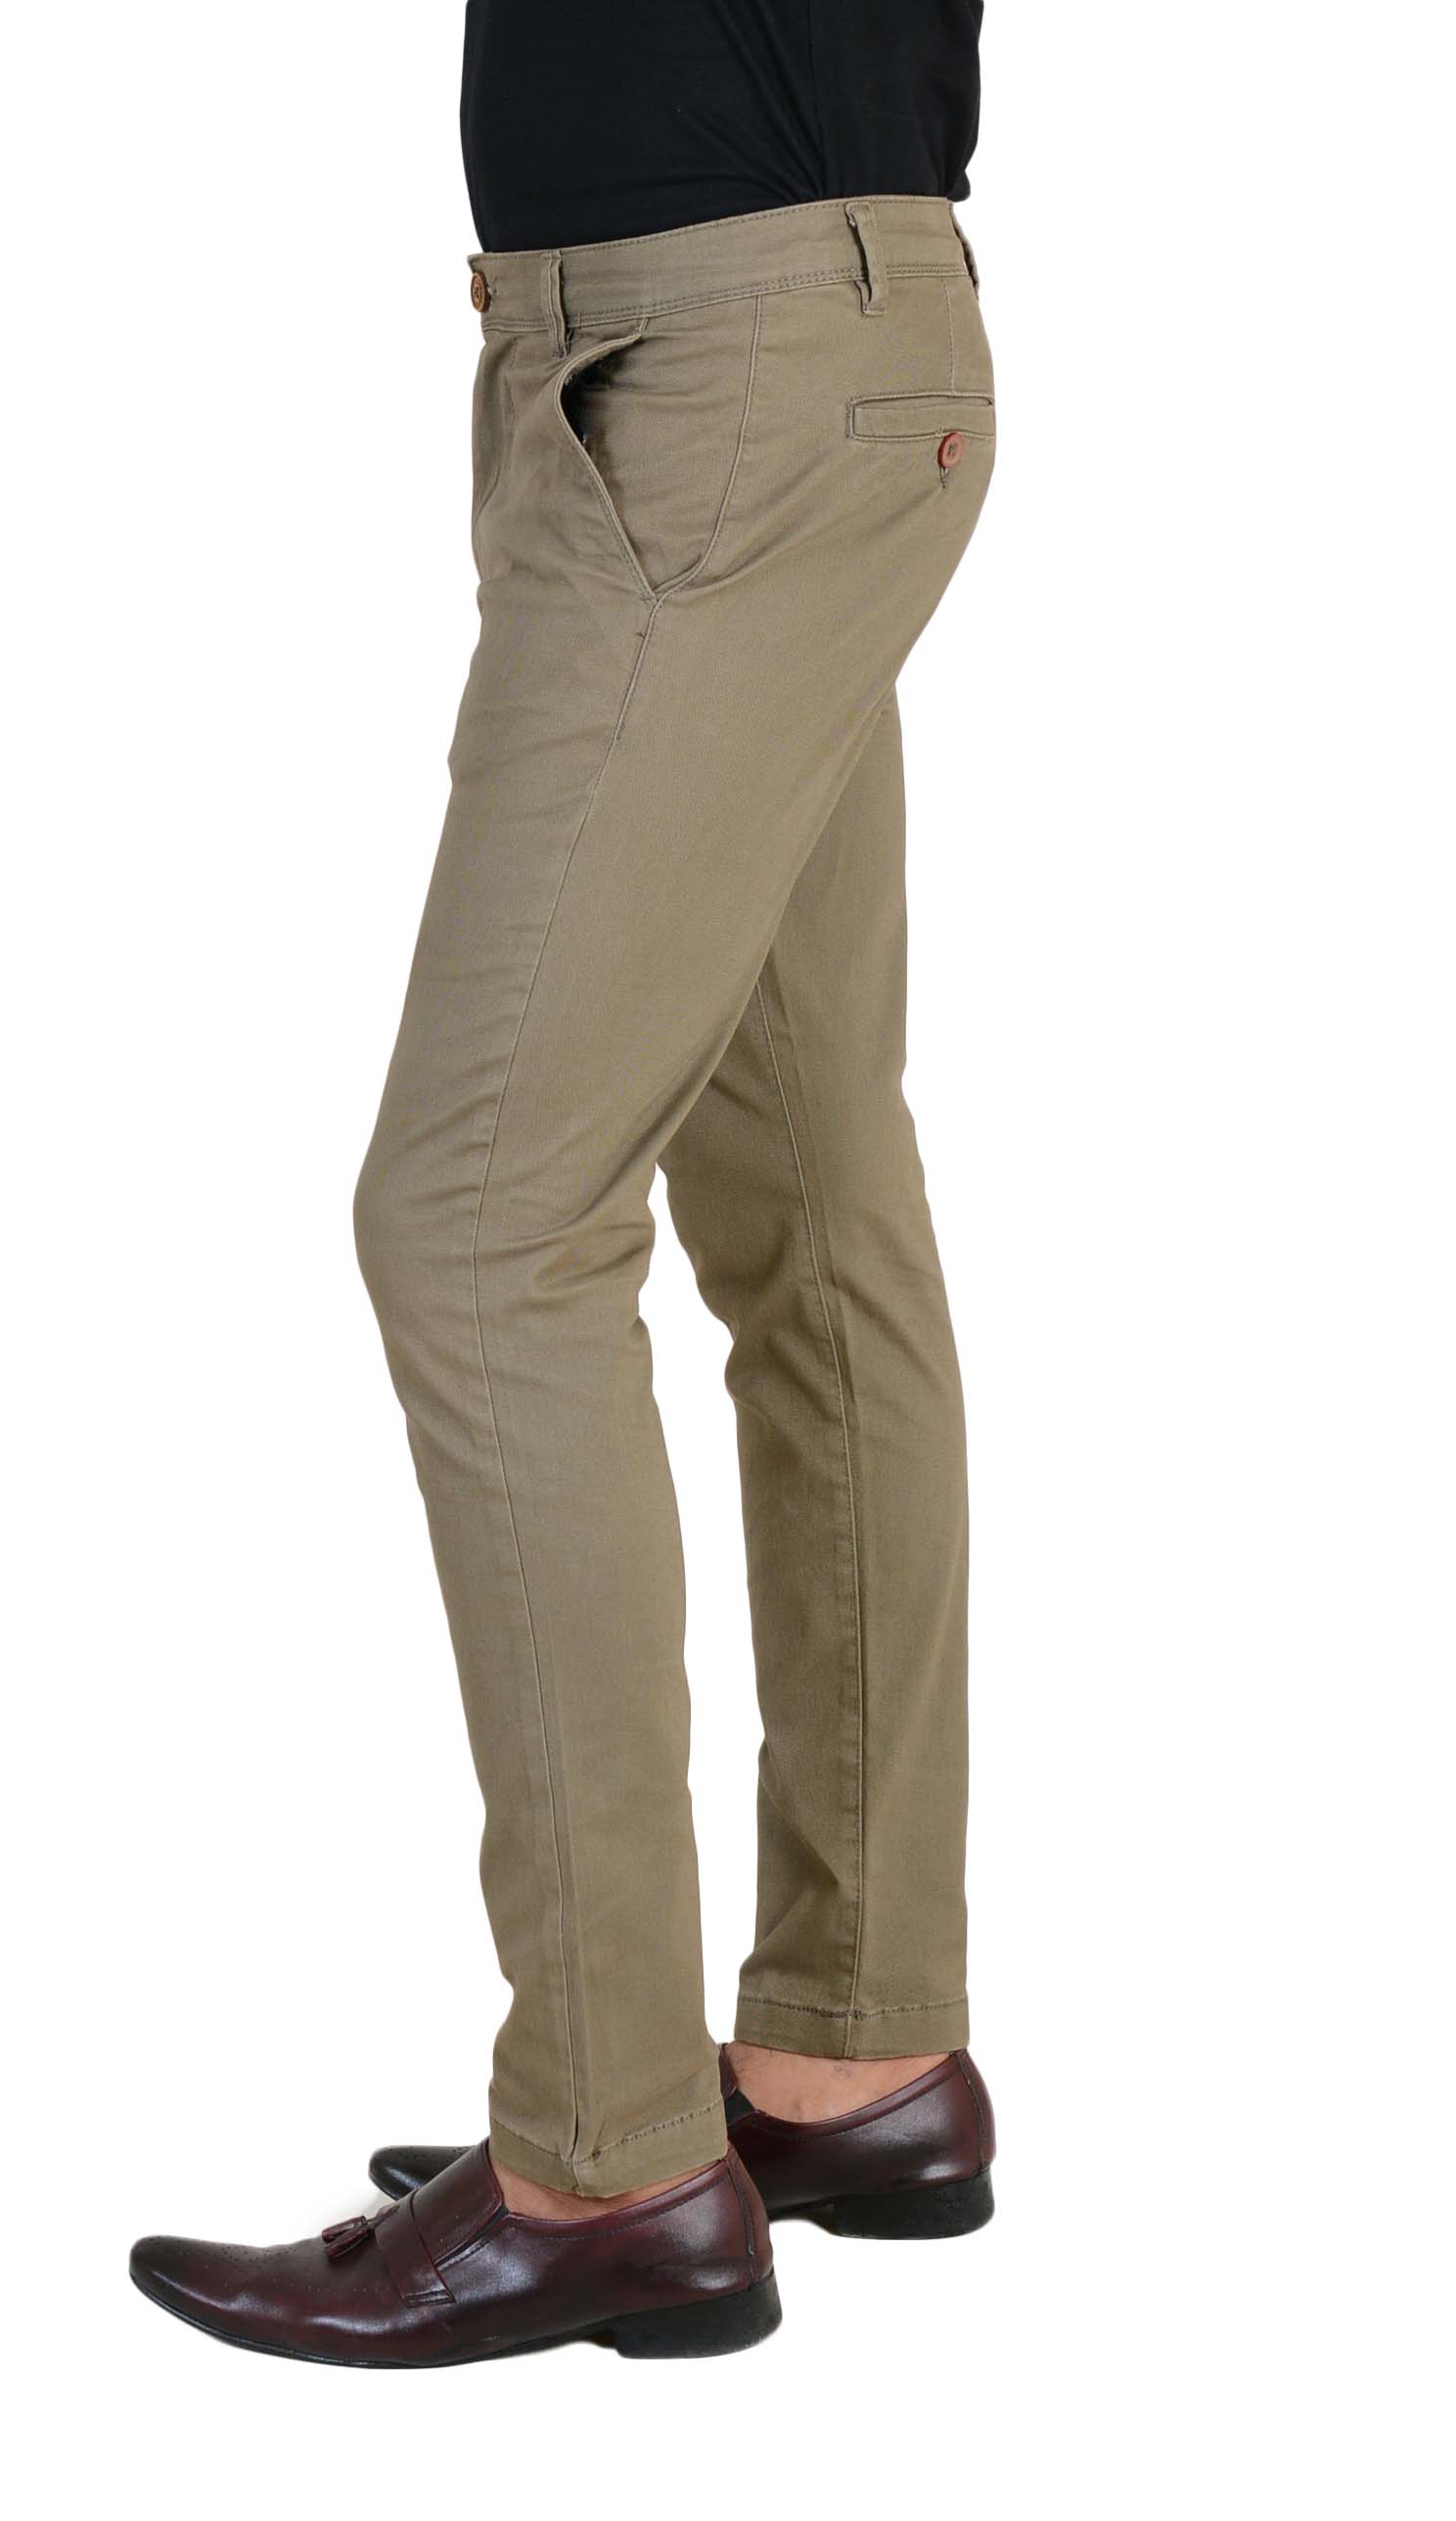 Chinos Khaki Pants Men's Gurkha Pants Tapered Pants Vintage Casual Trousers  | eBay